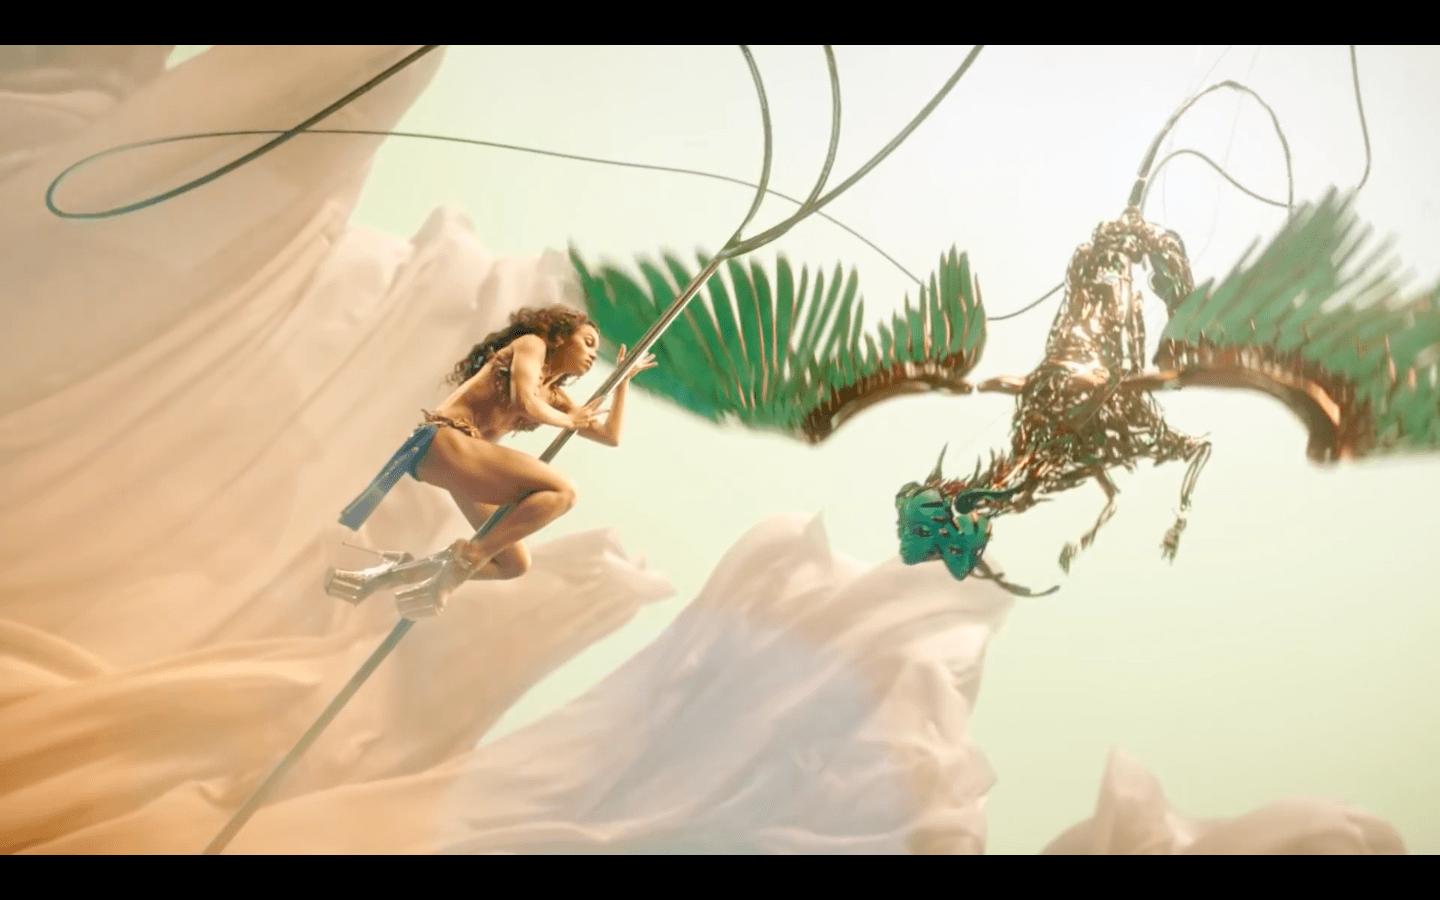 ⚡ FKA Twigs shares metaphorical, breathtaking visuals